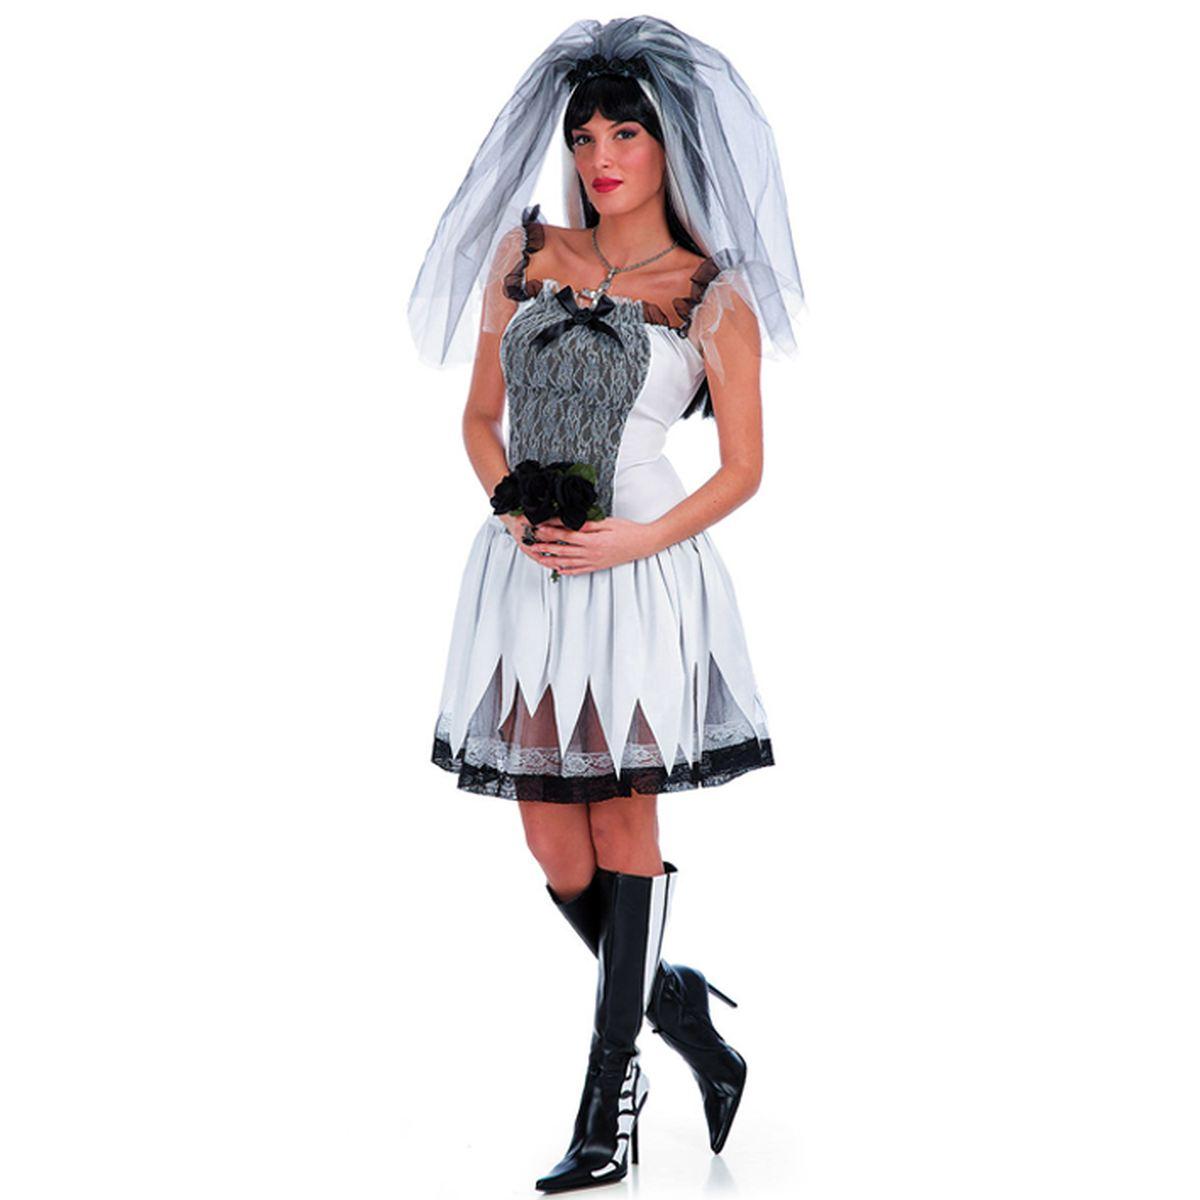 Costume Sposa Infernale Donna per Halloween - Vendita Online su M2 Store